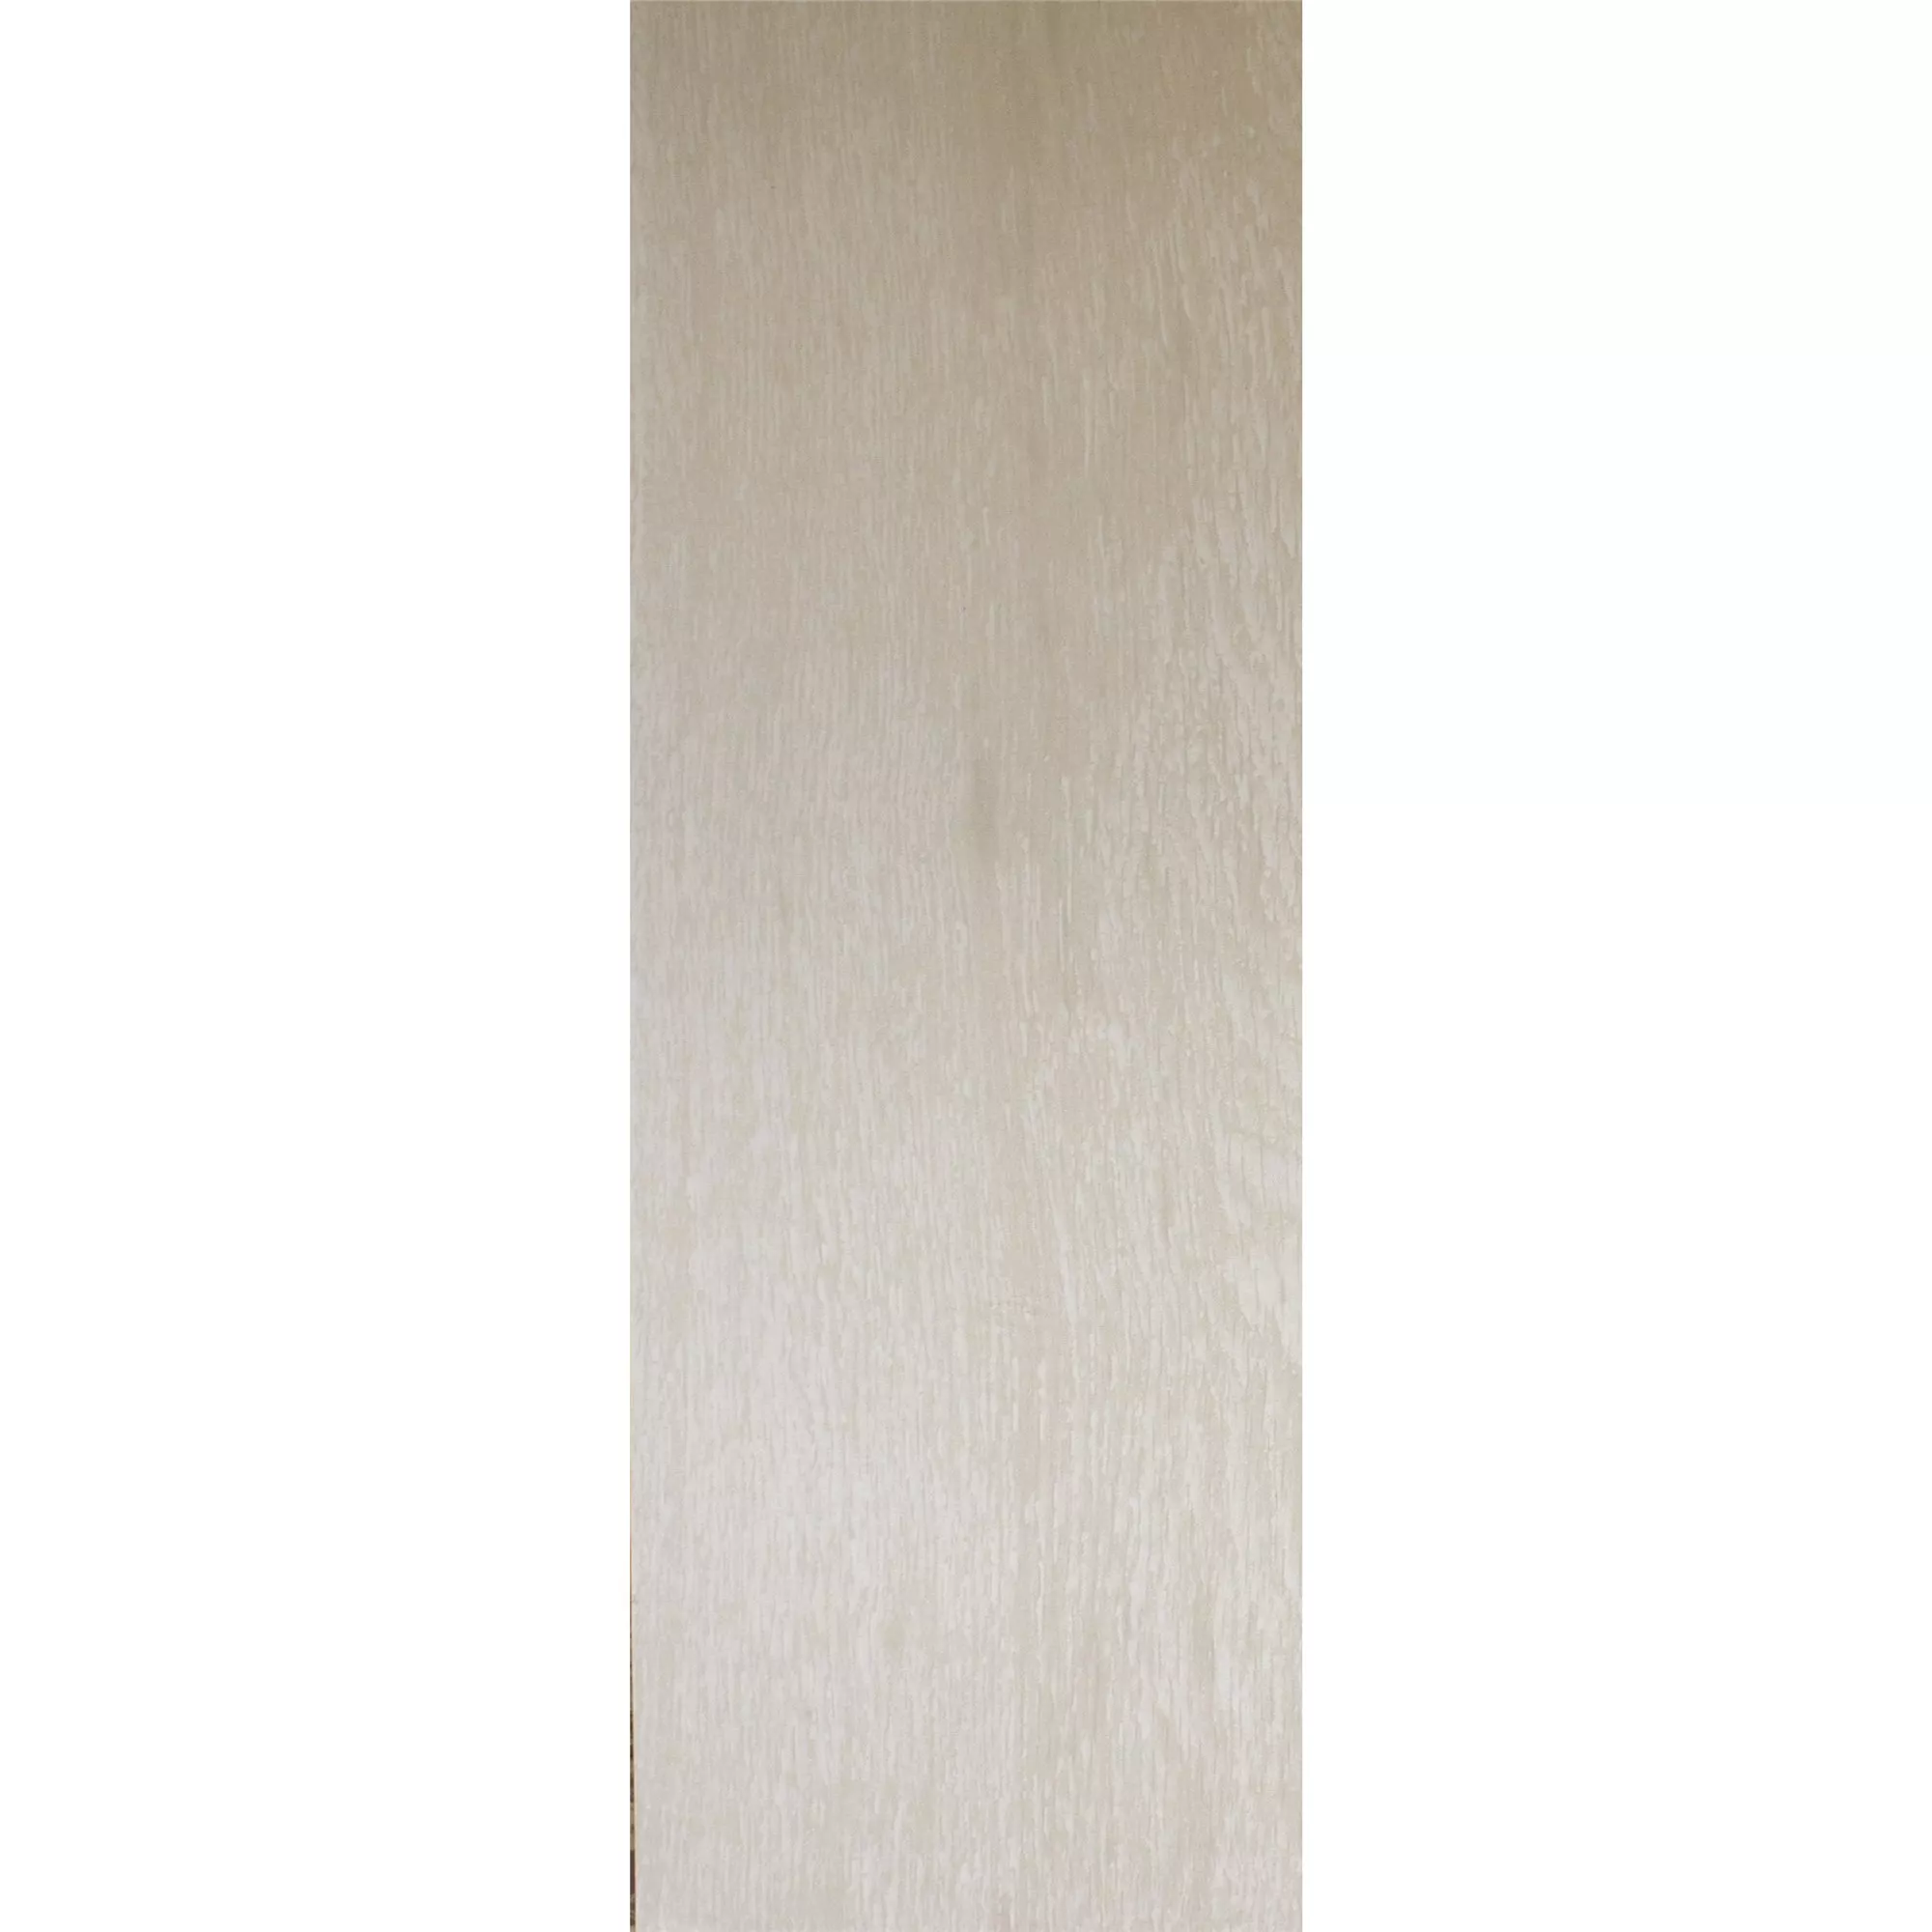 Padrão Ladrilho Herakles Aparência de Madeira White 20x120cm